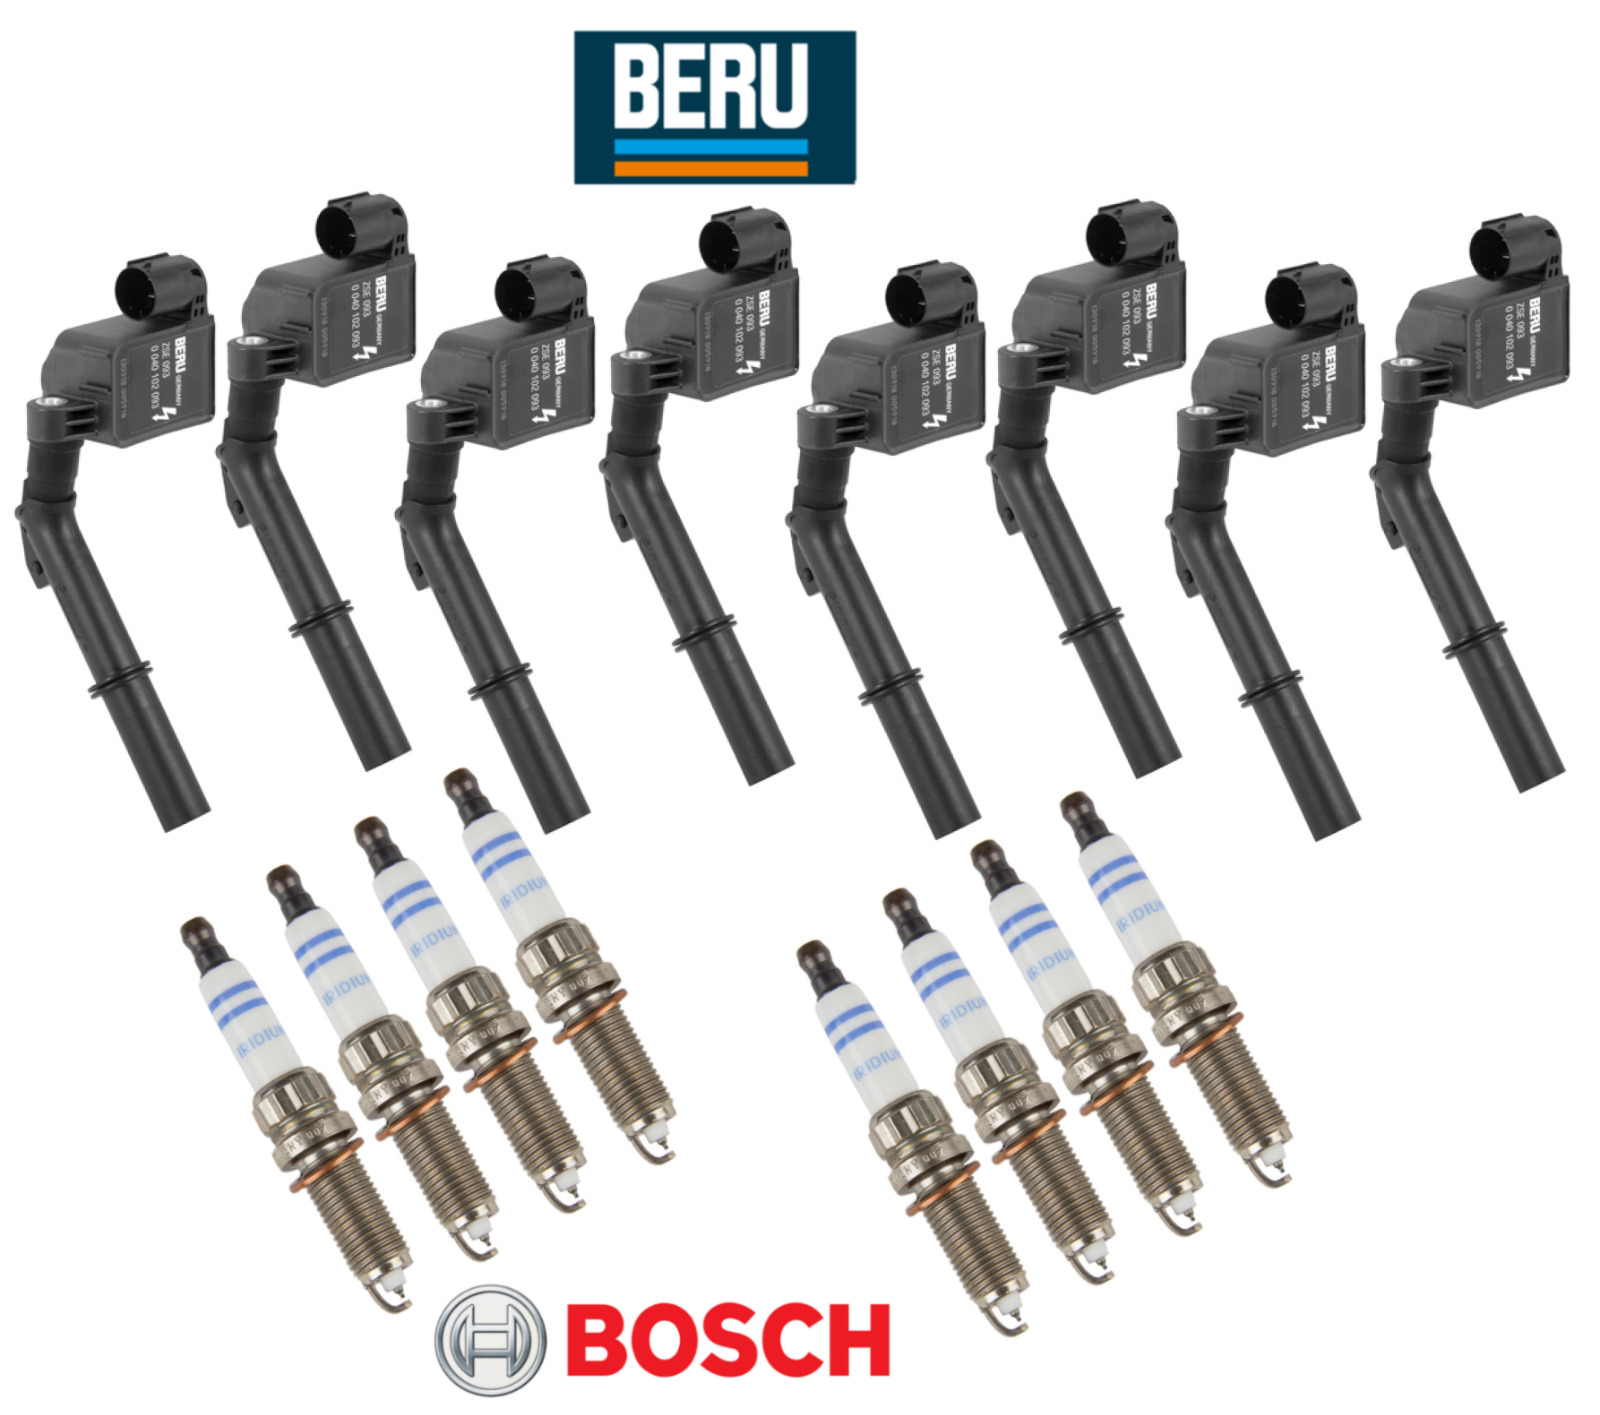 For Mercedes V8 OEM Ignition Coil Beru & Spark Plug Double Iridium Bosch (8sets)